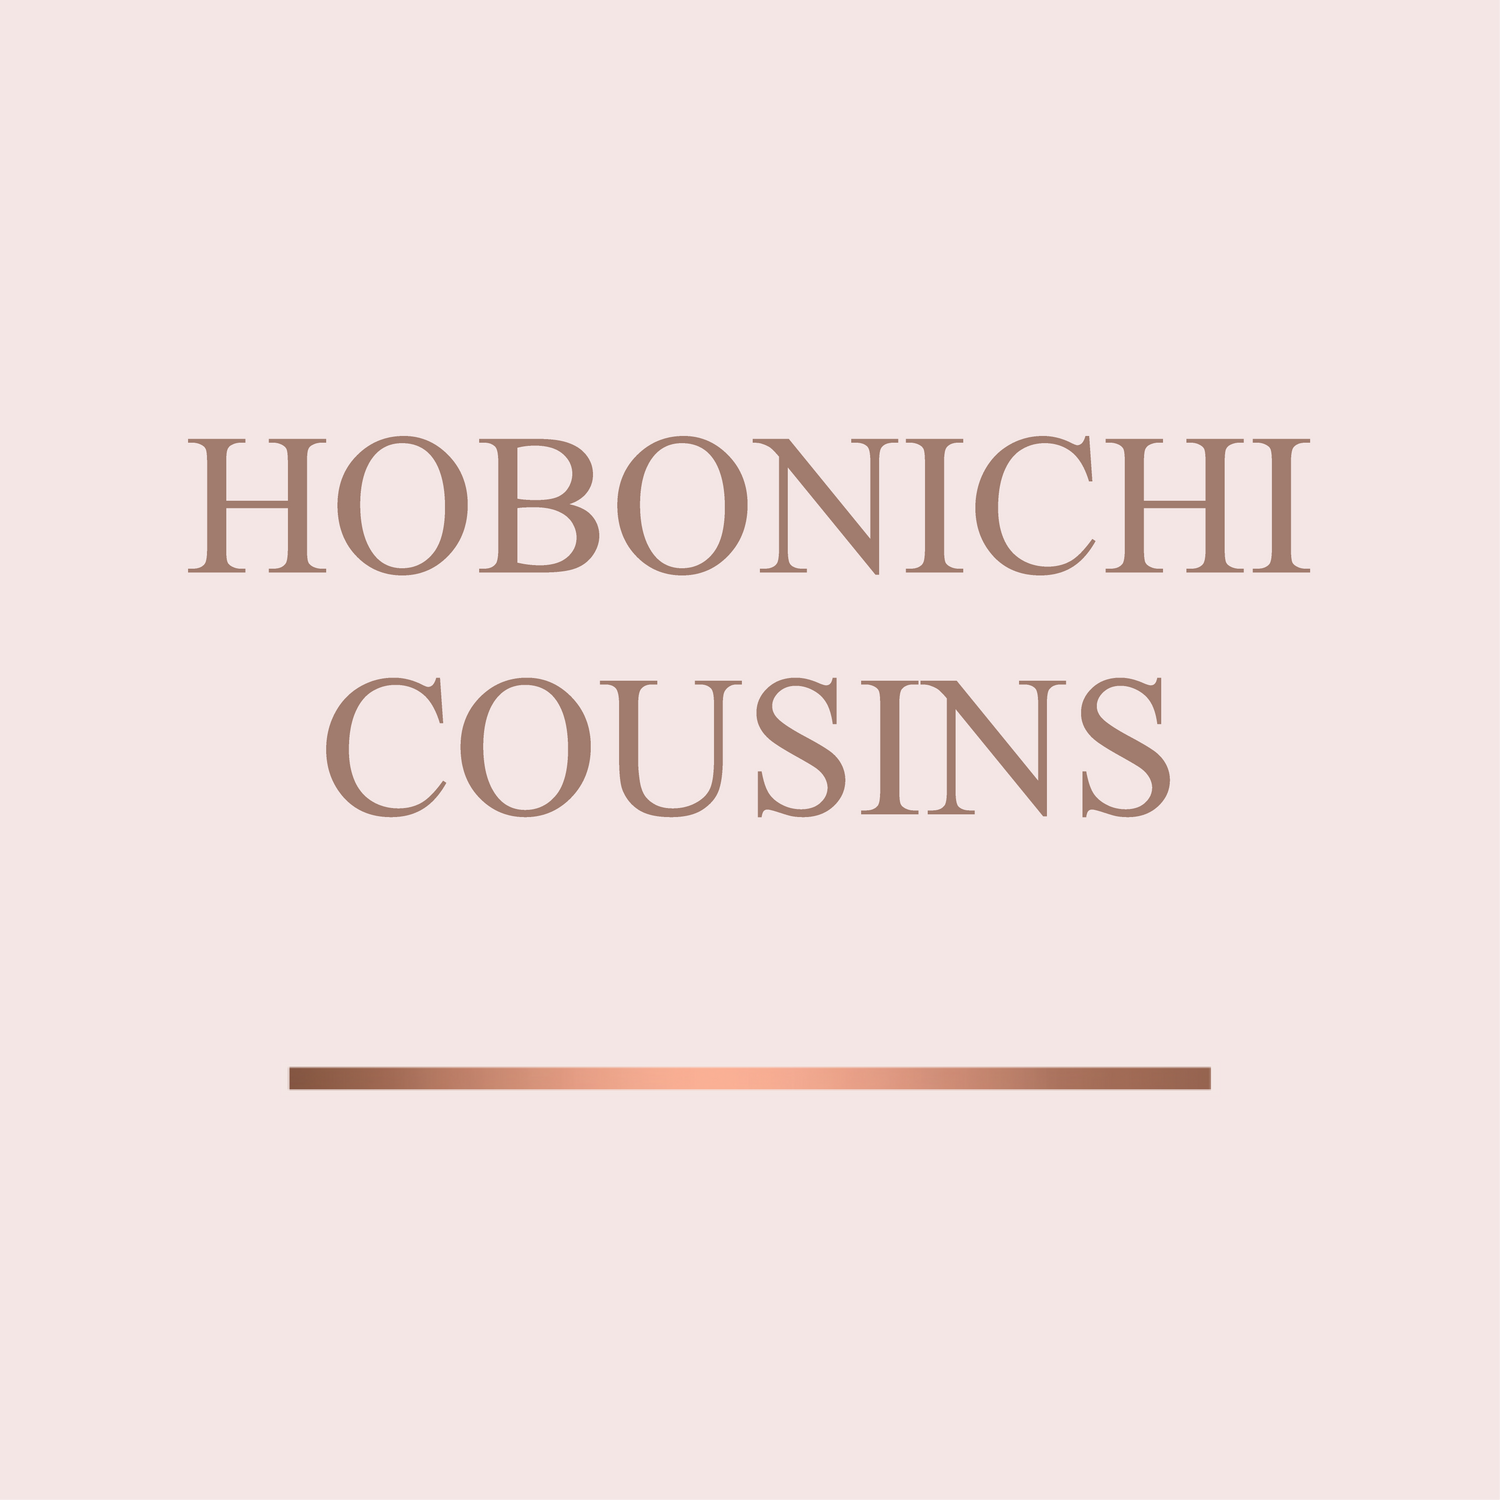 Hobonichi Cousins